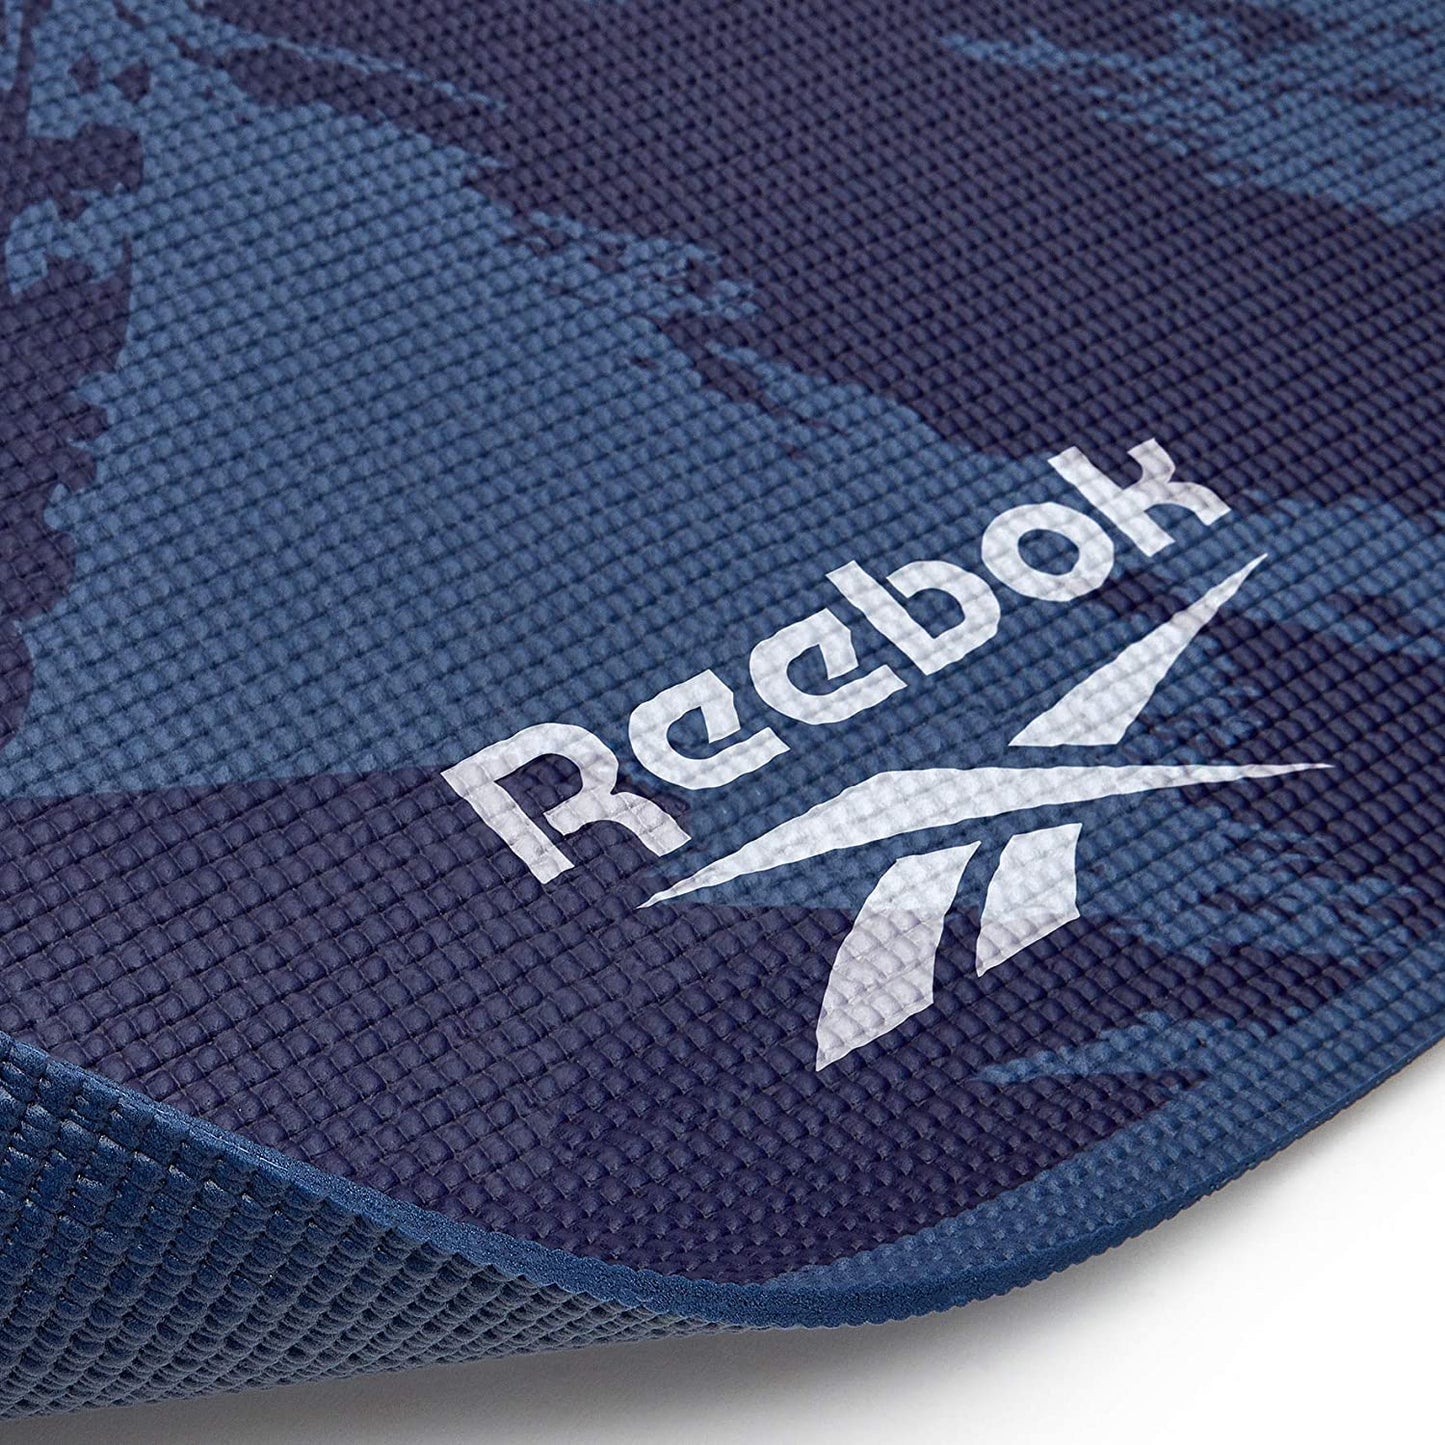 REEBOK Yoga MAT 4MM - Best Price online Prokicksports.com